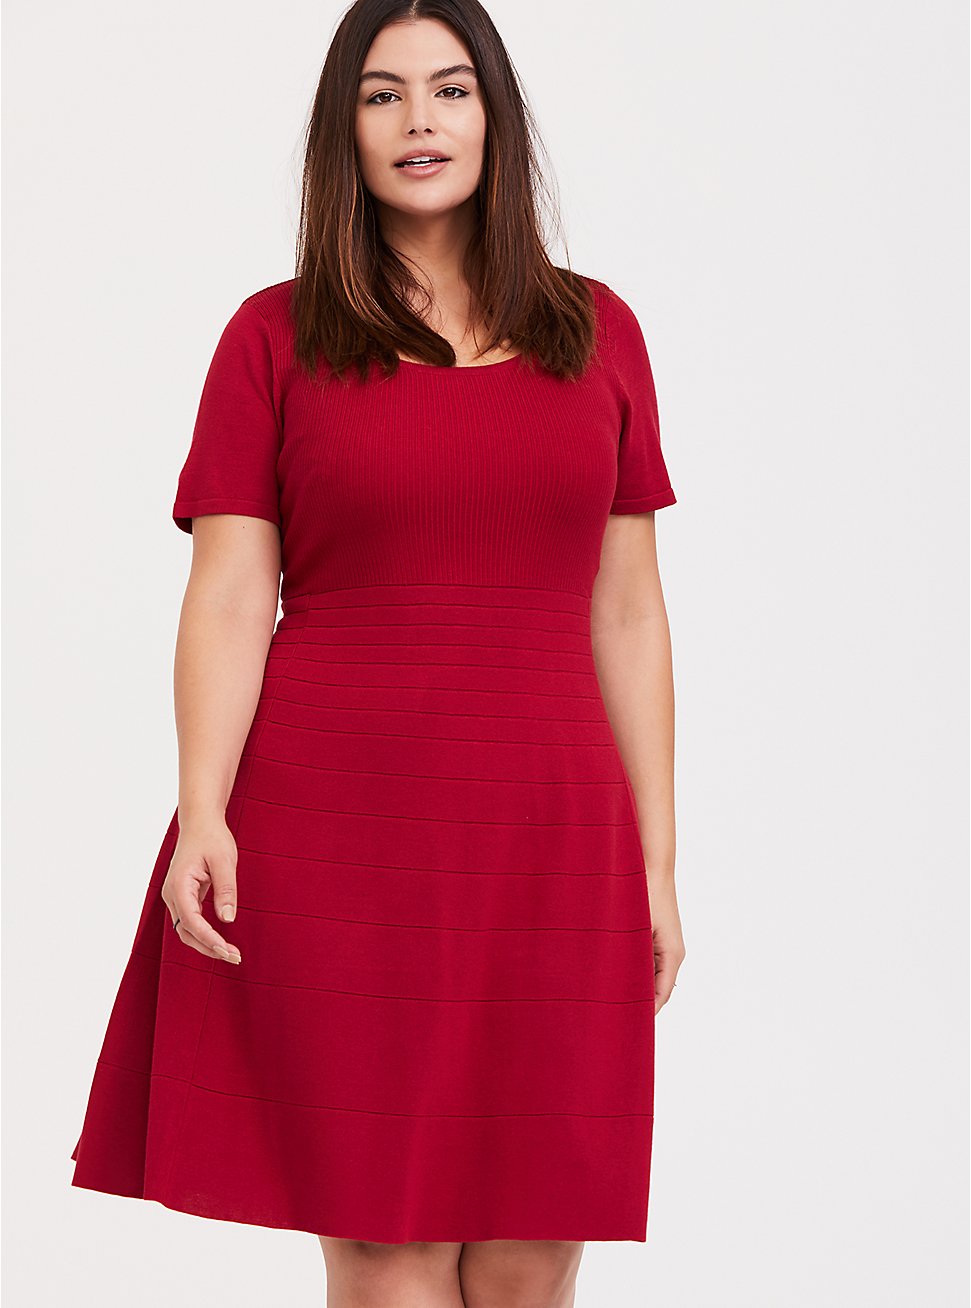 Plus Size - Red Sweater Knit Skater Dress - Torrid